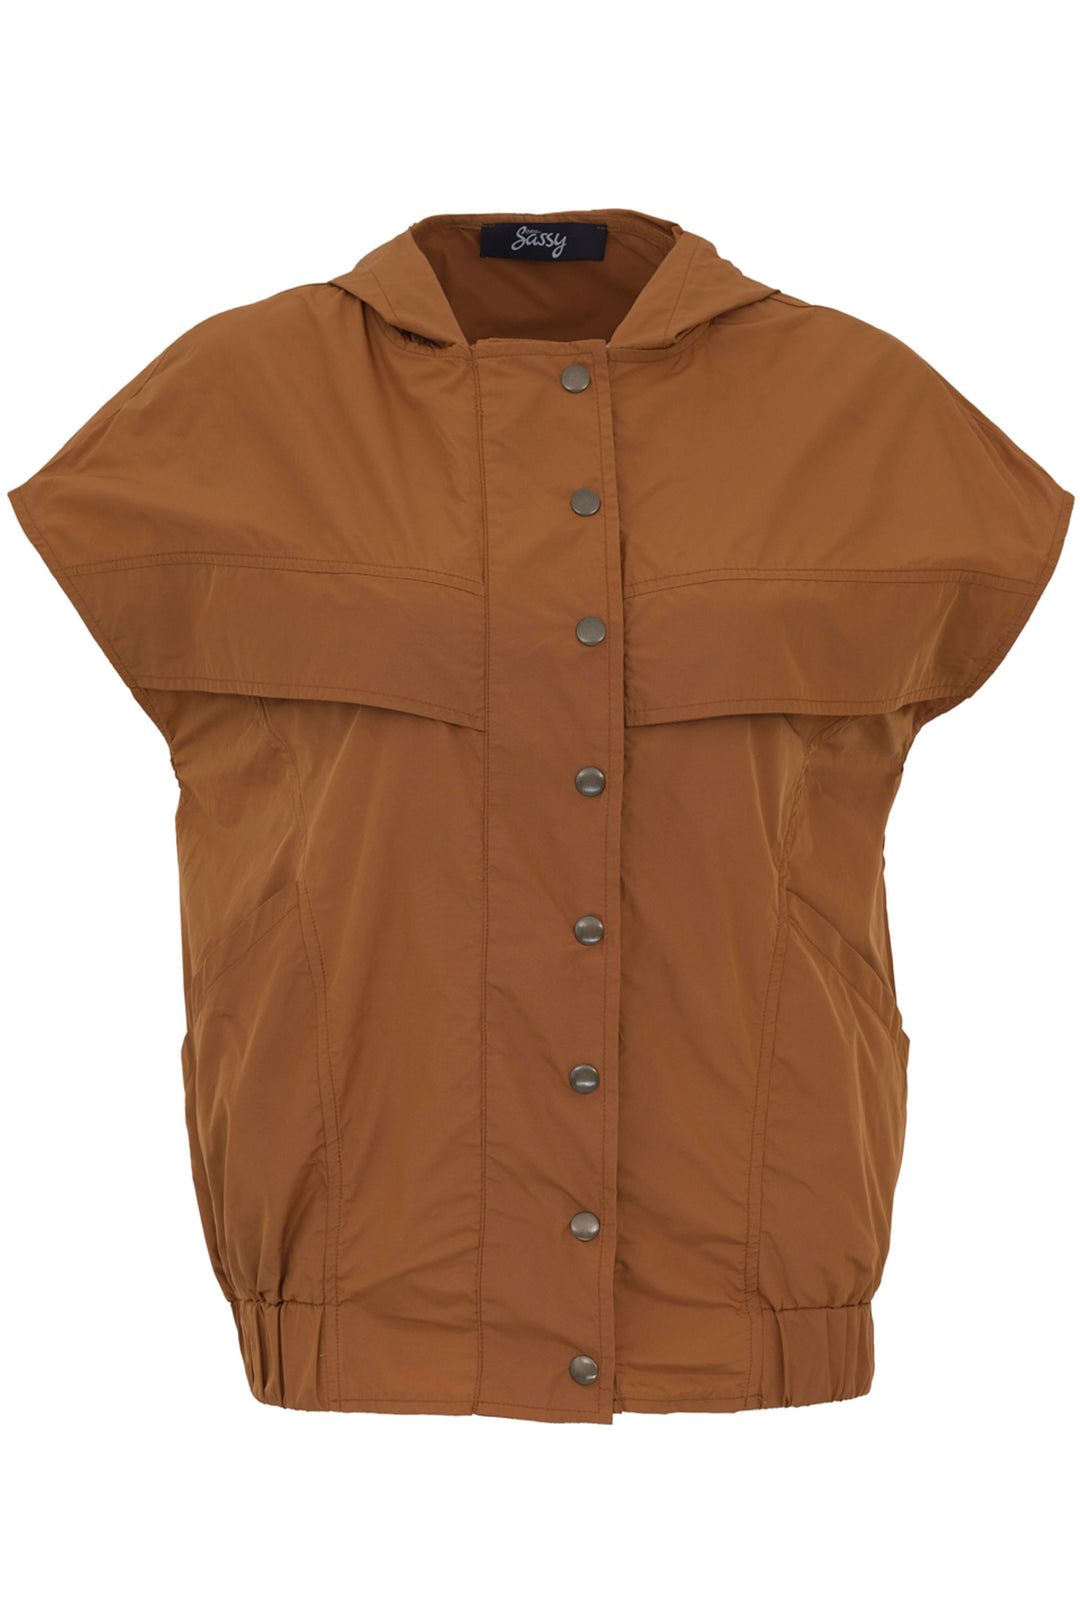 EverSassy Spring 2023 women's casual lightweight short sleeve hoodie vest jacket - front